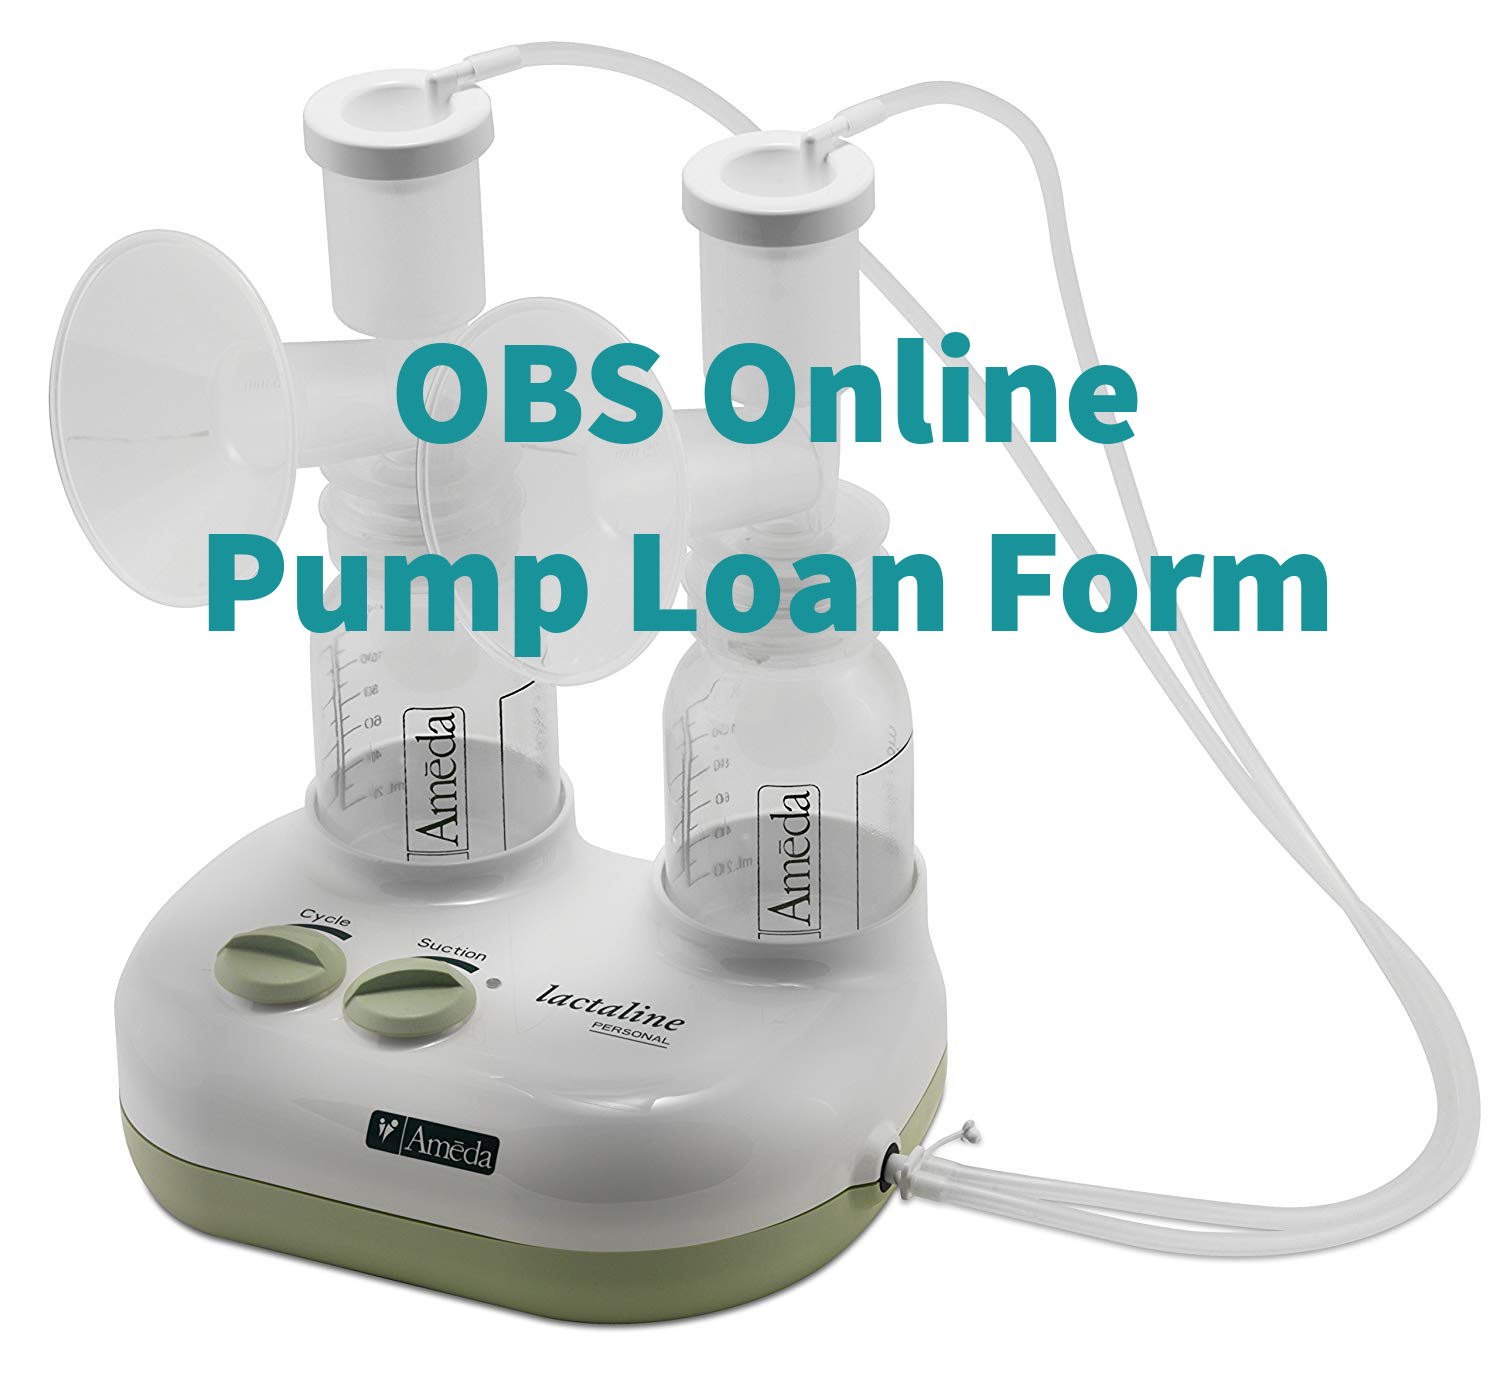 OBS Online Pump Loan Form